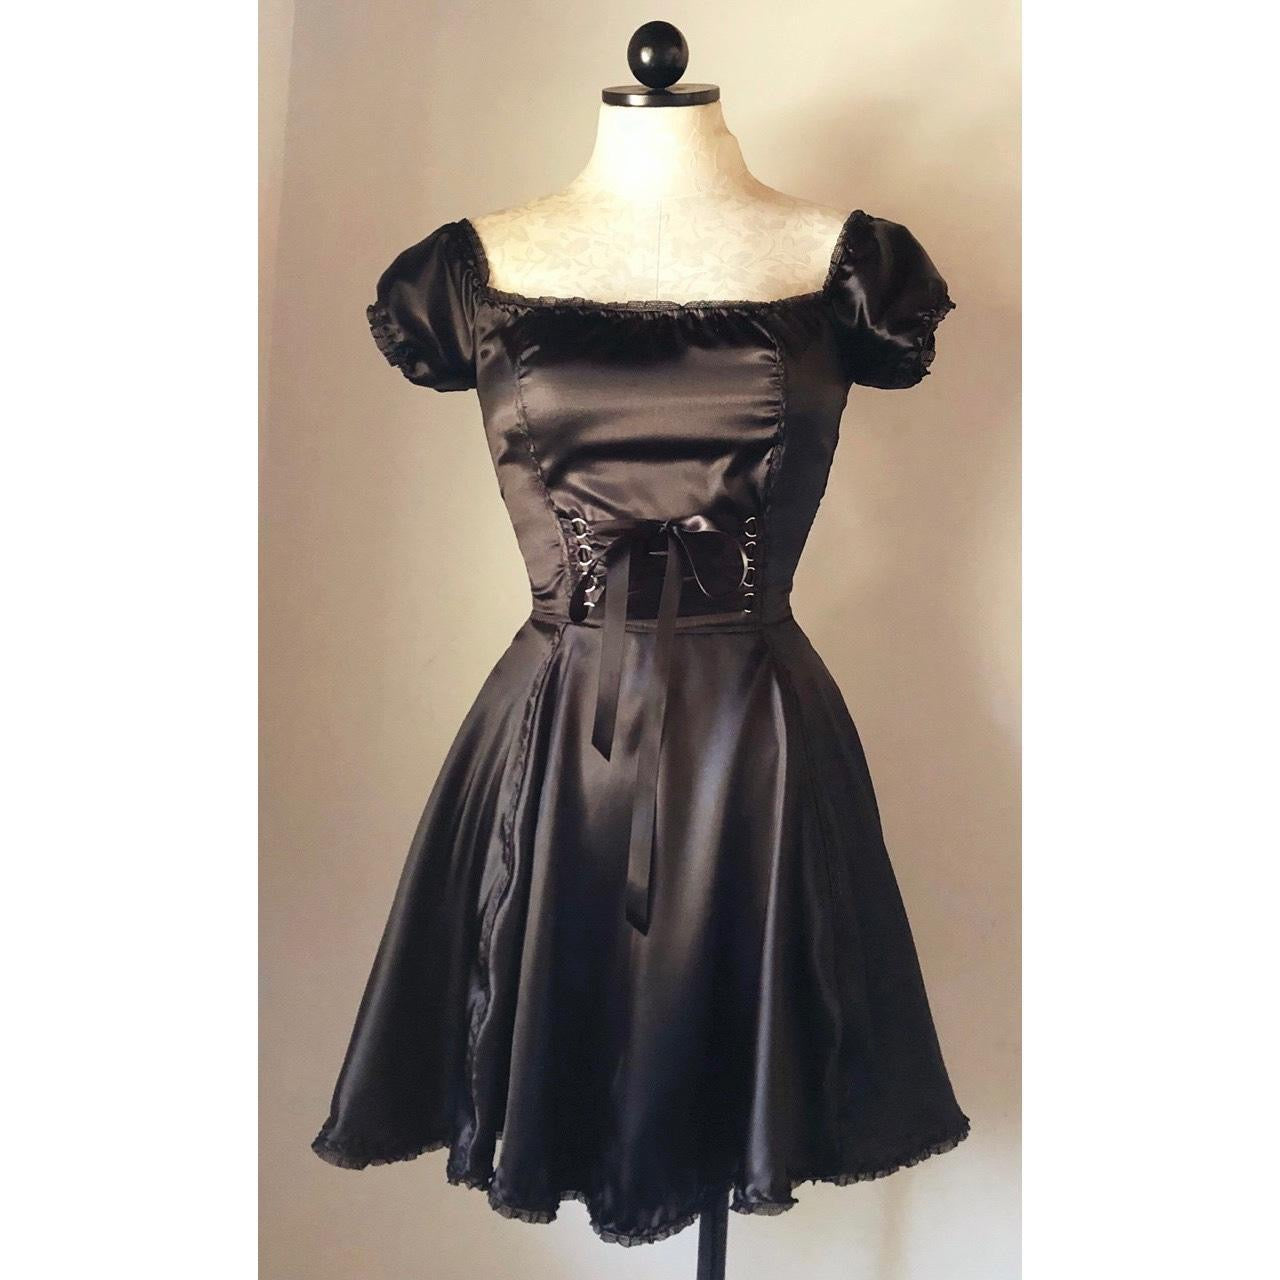 The Satin Tori Barmaid Dress in Black